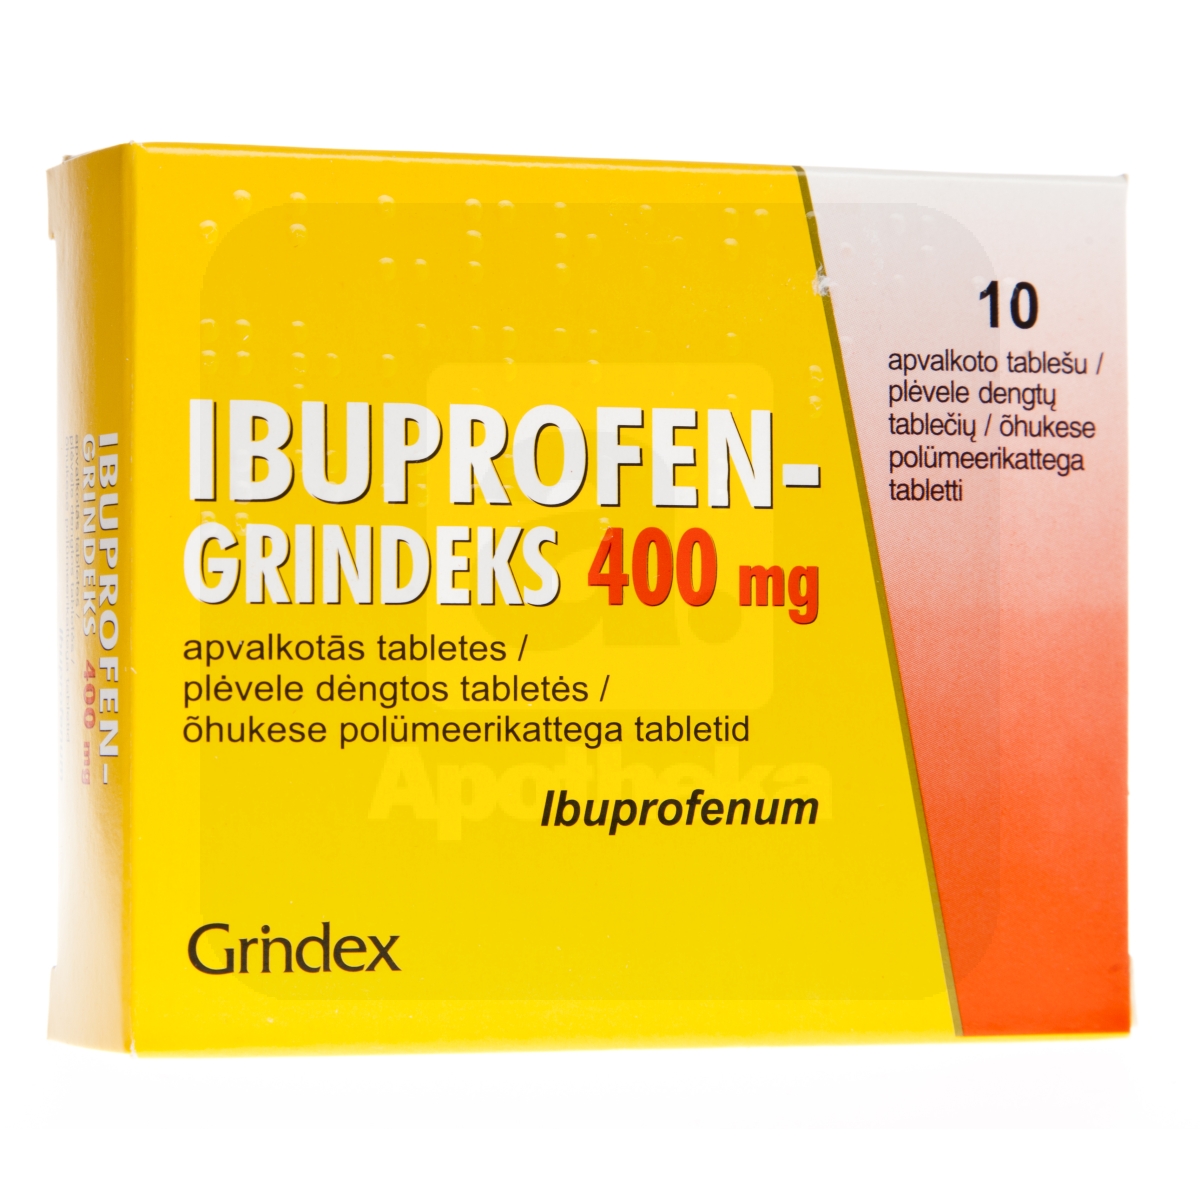 IBUPROFEN-GRINDEKS TBL 400MG N10